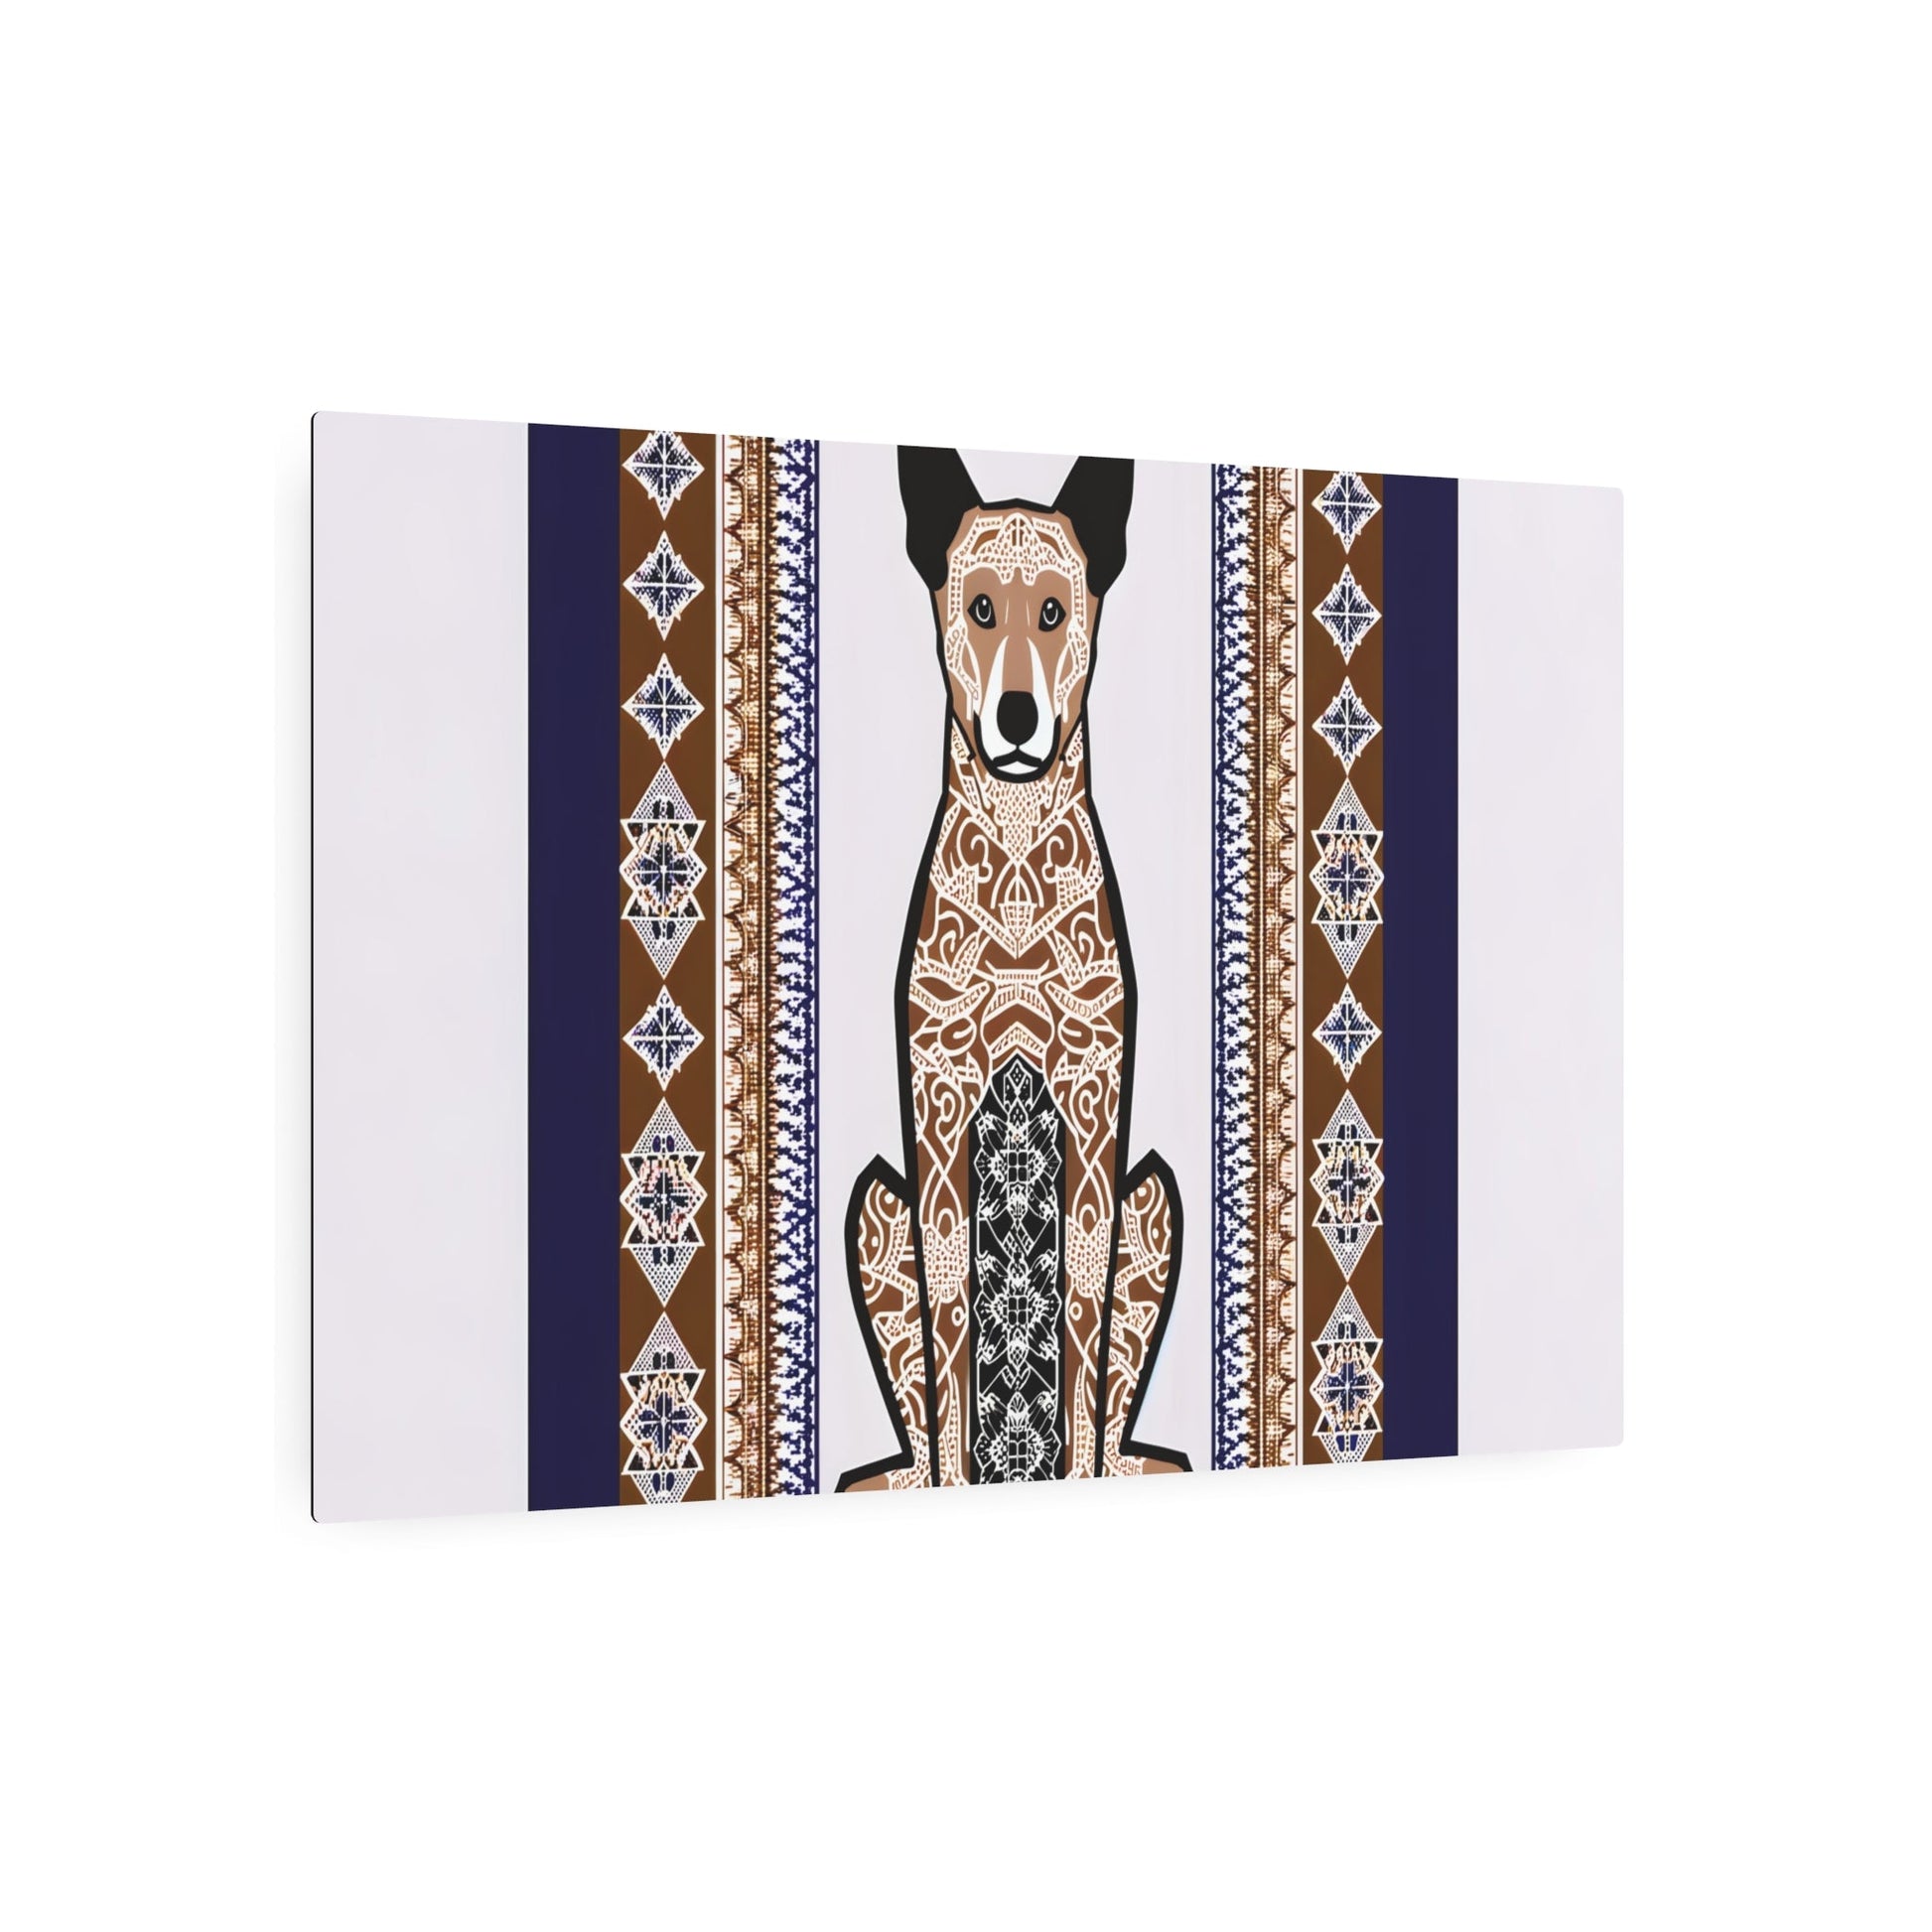 Metal Poster Art | "Batik Artwork - Intricate Indonesian Patterned Dog Design in Traditional Non-Western Style" - Metal Poster Art 36″ x 24″ (Horizontal) 0.12''